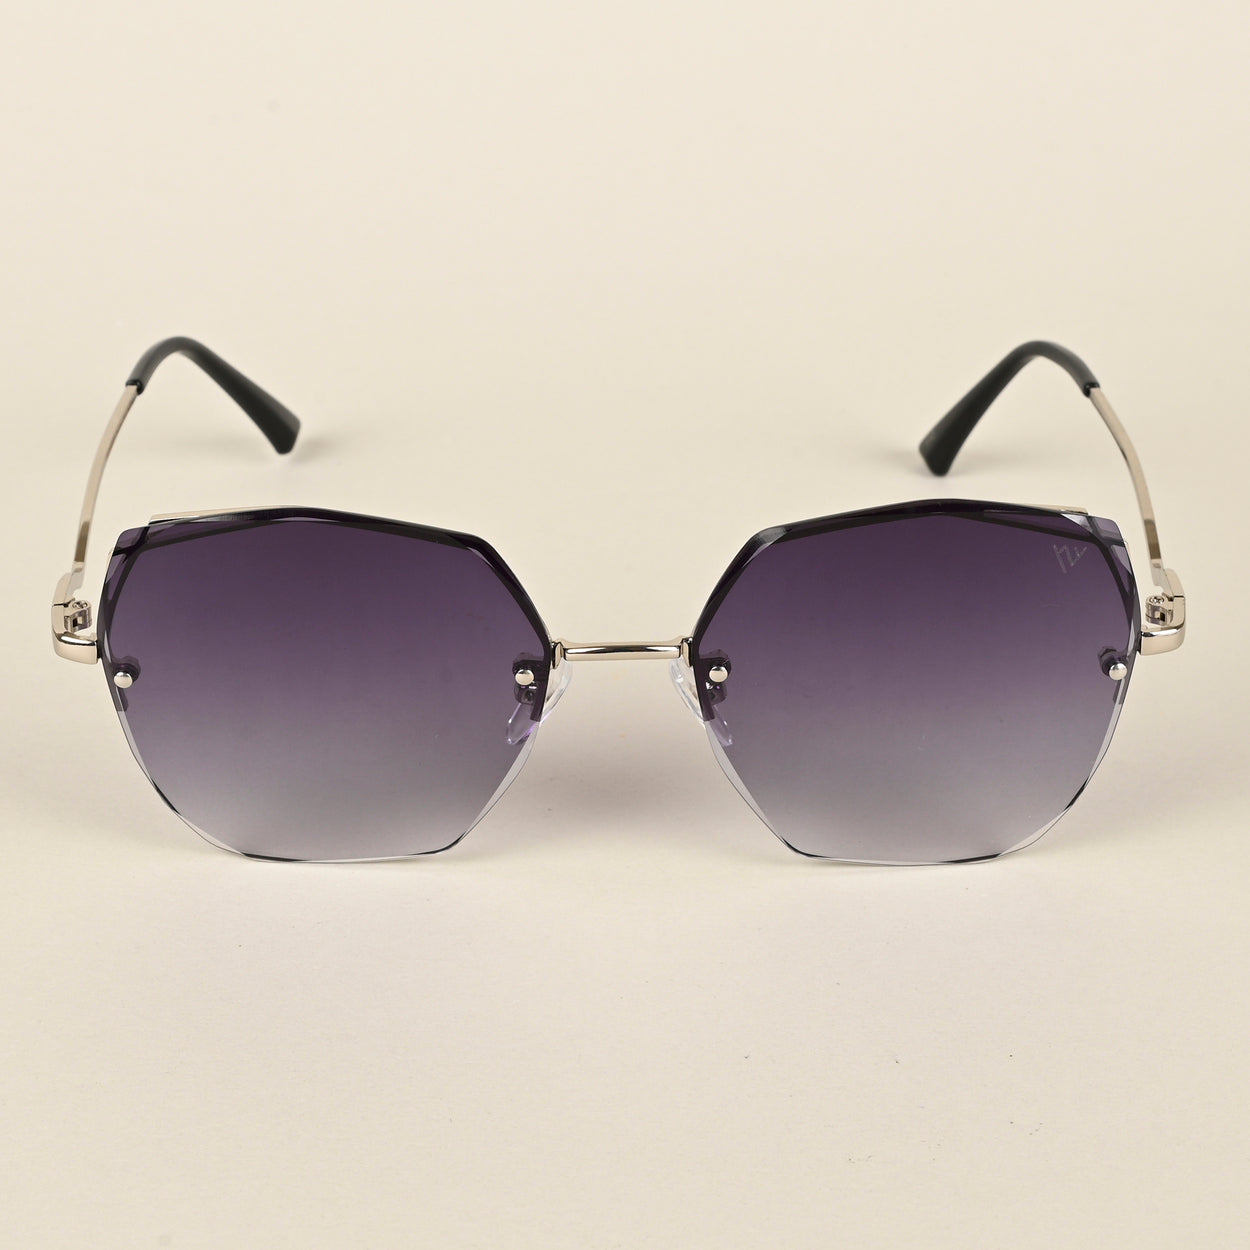 Voyage Purple Geometric Sunglasses for Women - MG4335